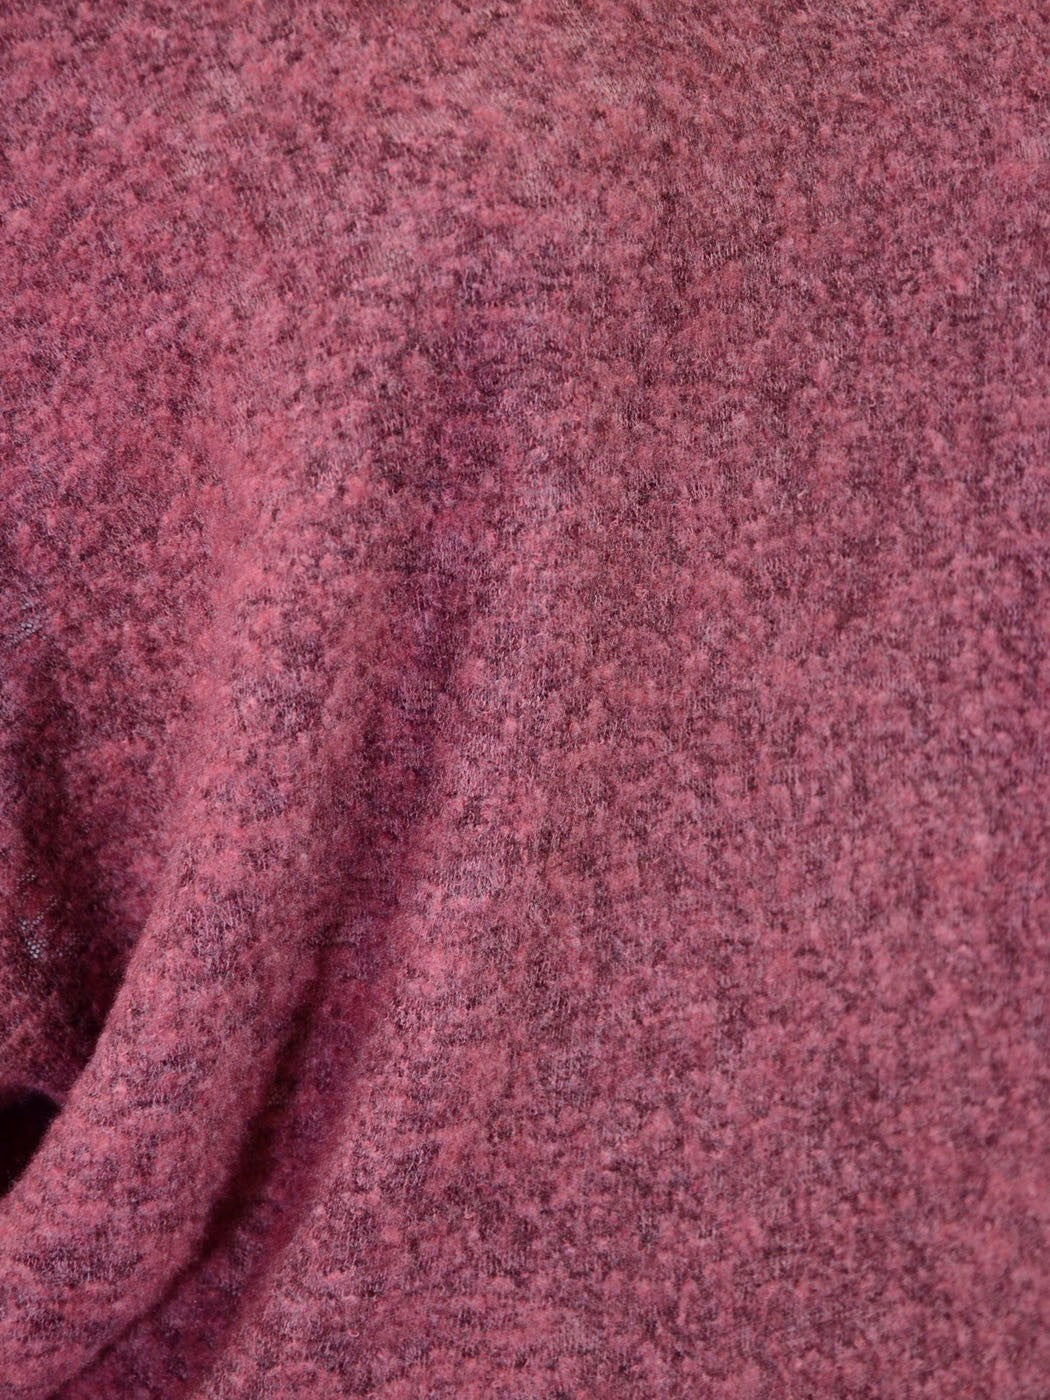 Anna-Kaci Comfortable Crochet Back Raglan Sleeves Heathery Brushed Sweater Top